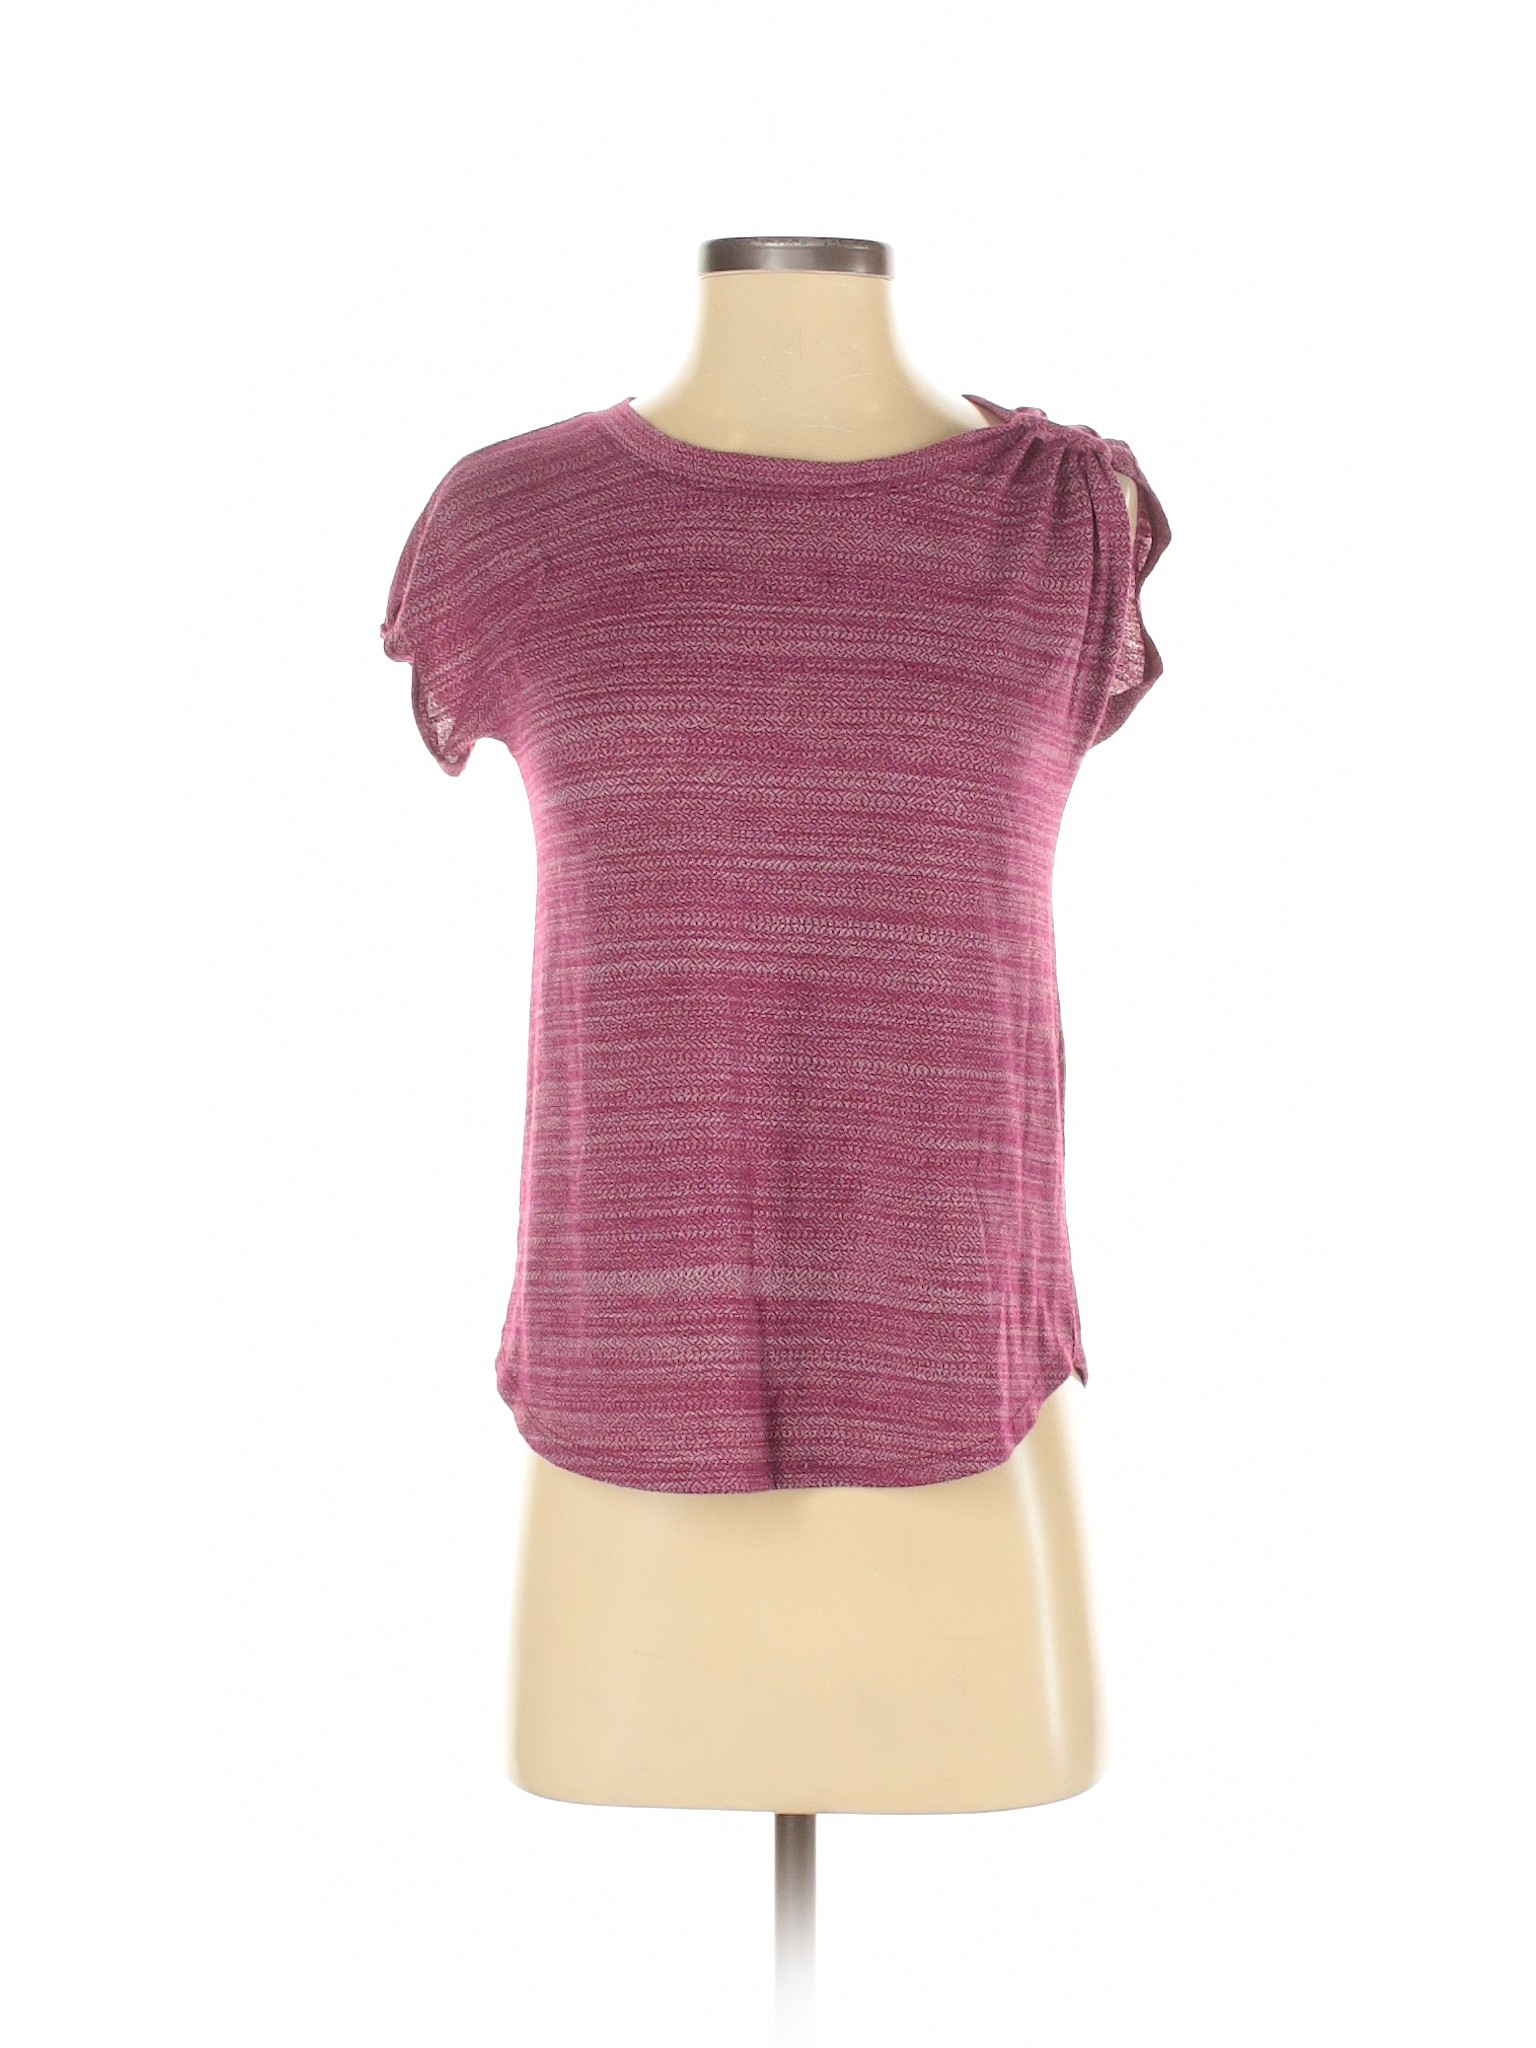 Maurices Women Pink Short Sleeve Top XS | eBay